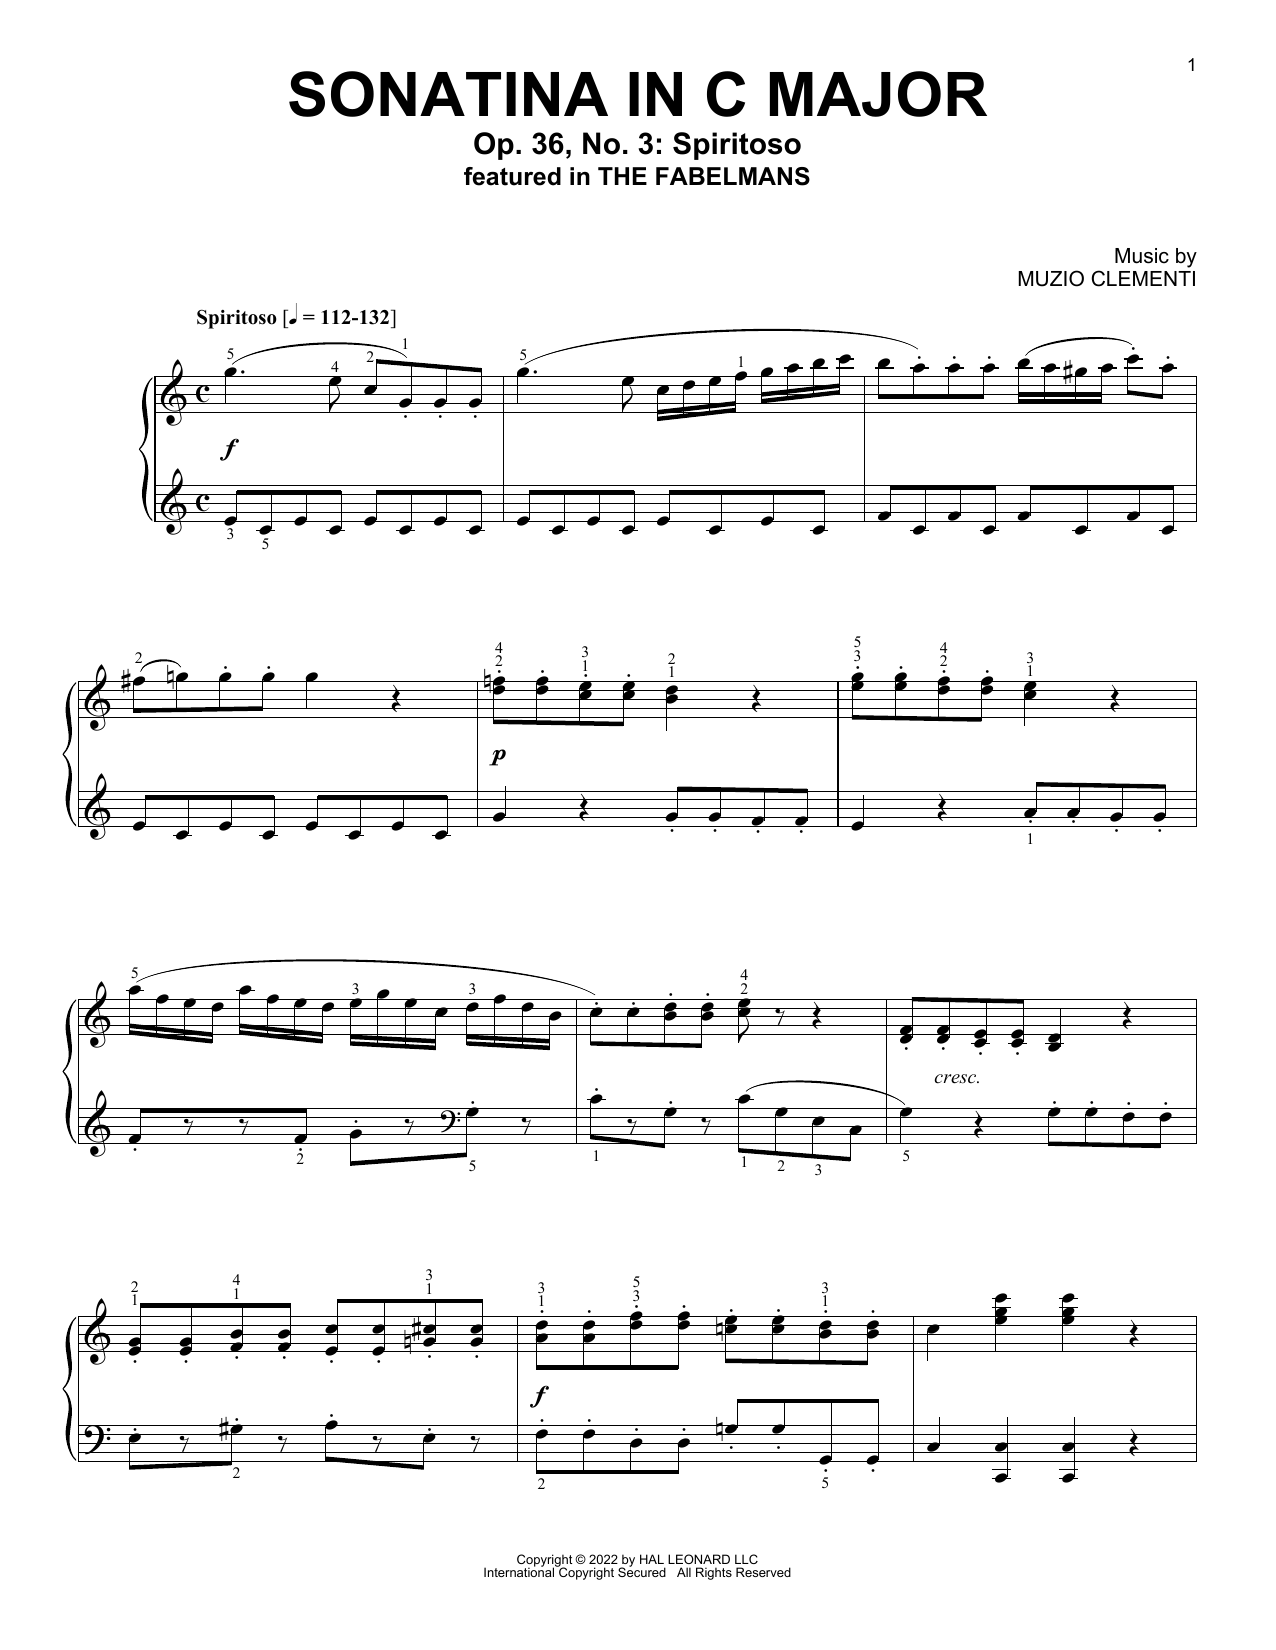 Muzio Clementi Sonatina In C Major (Op. 36, No. 3: Spiritoso) Sheet Music Notes & Chords for Piano Solo - Download or Print PDF